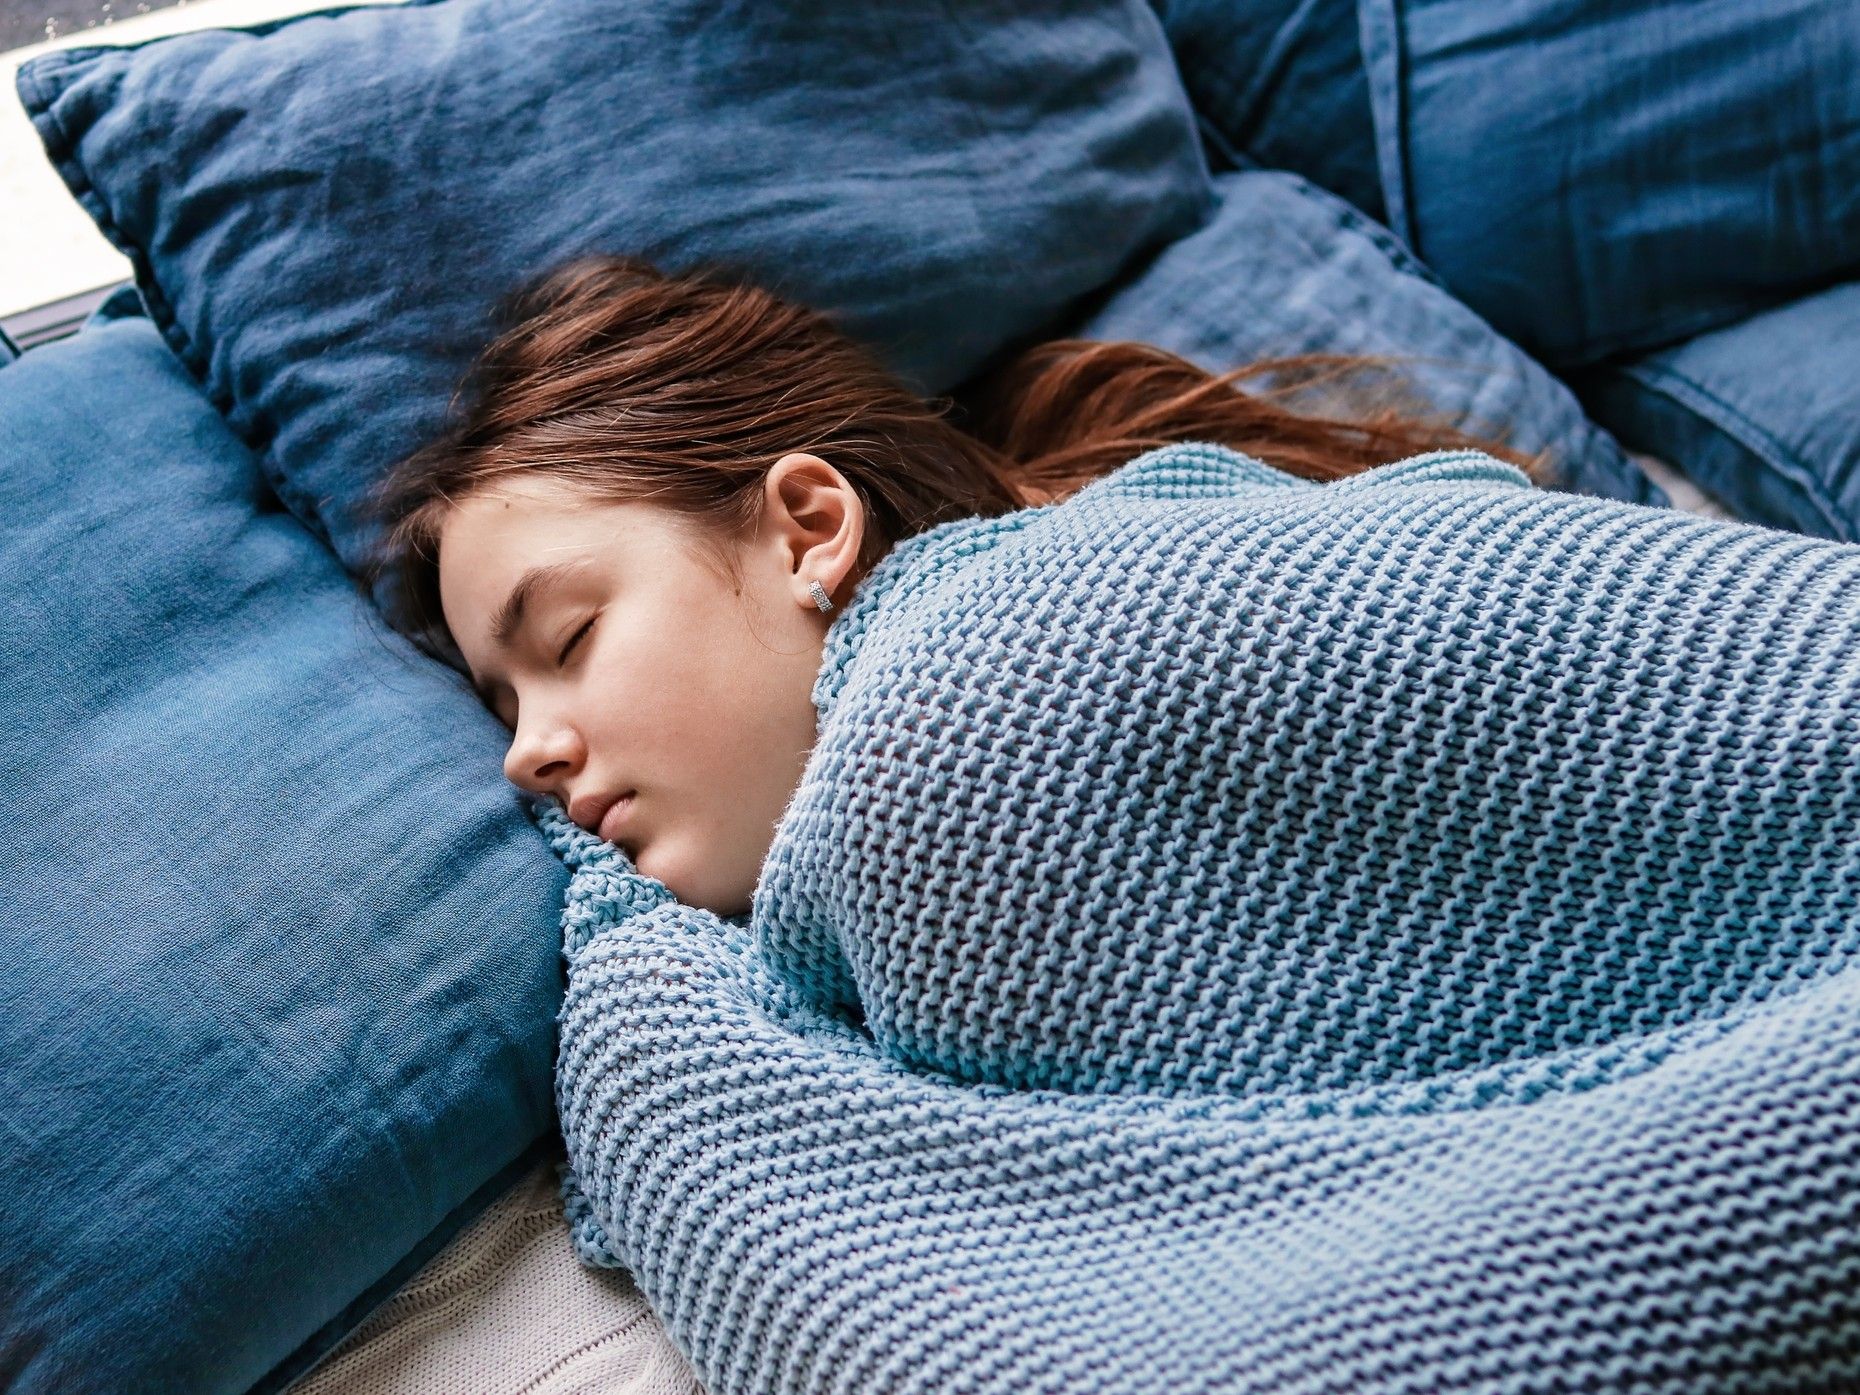 Teenagers aren't getting enough sleep. (Getty)